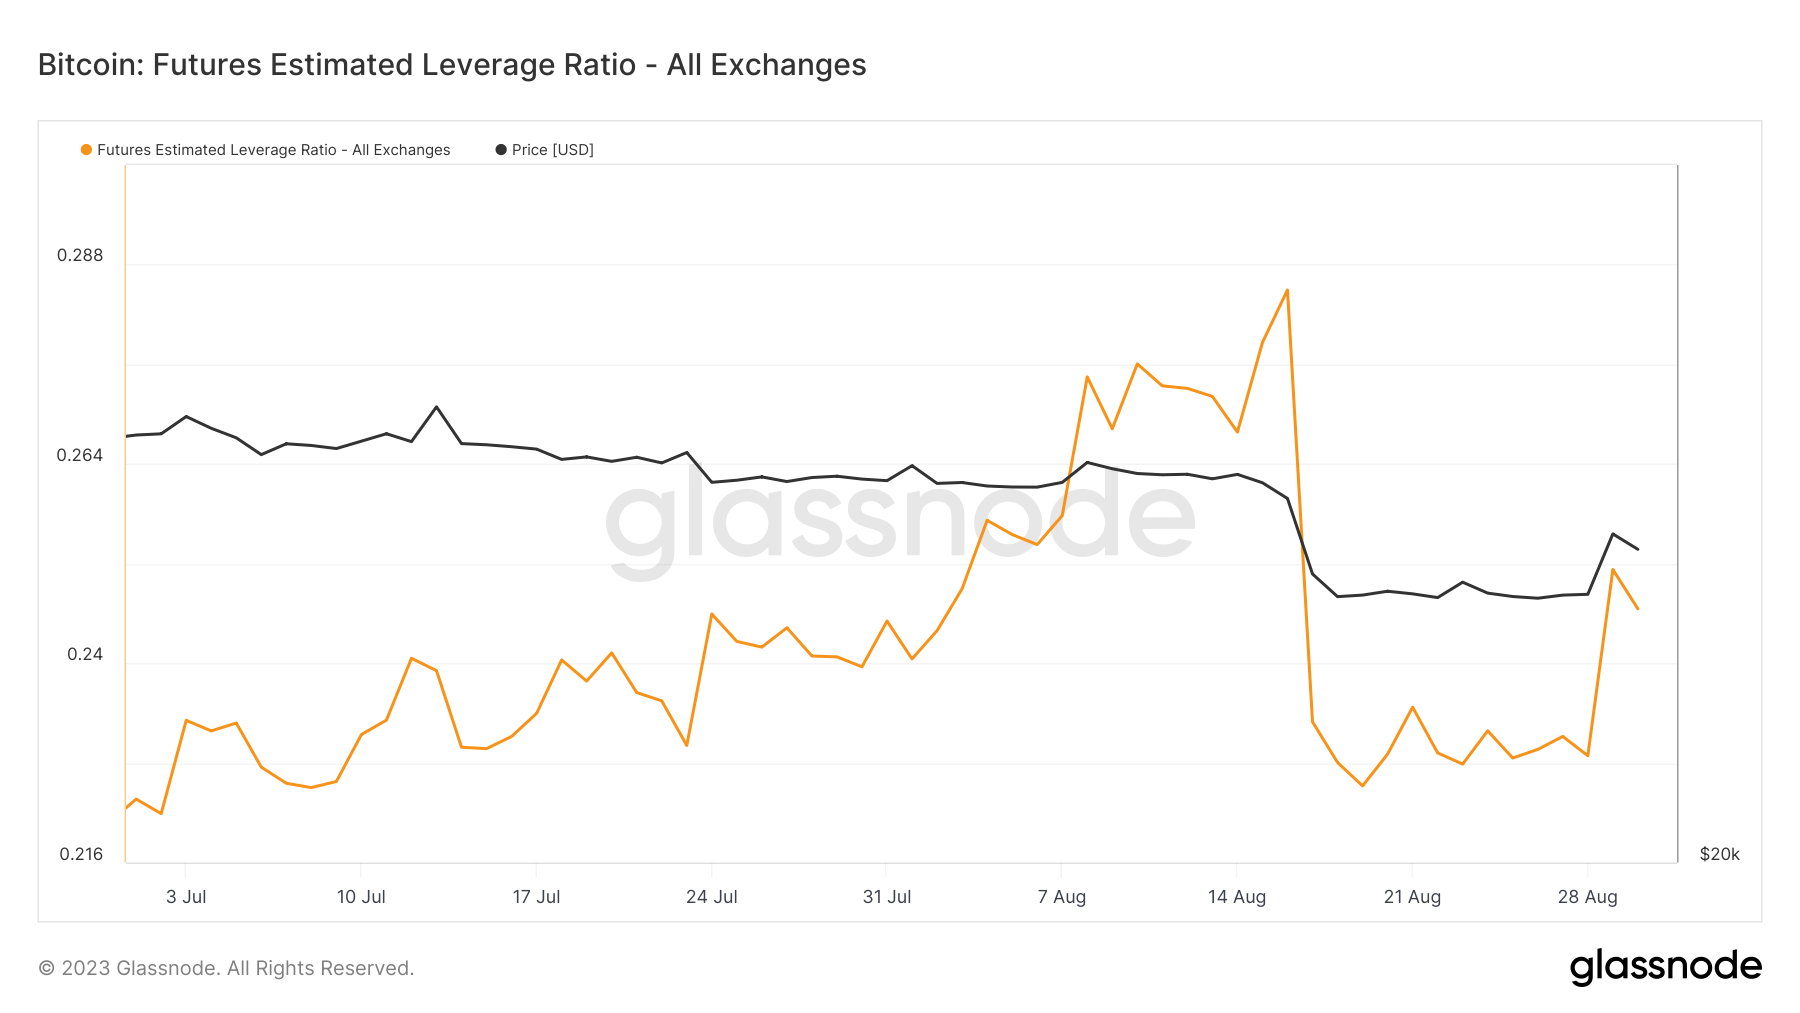 Estimated Leverage Ratio (ELR) for Bitcoin futures